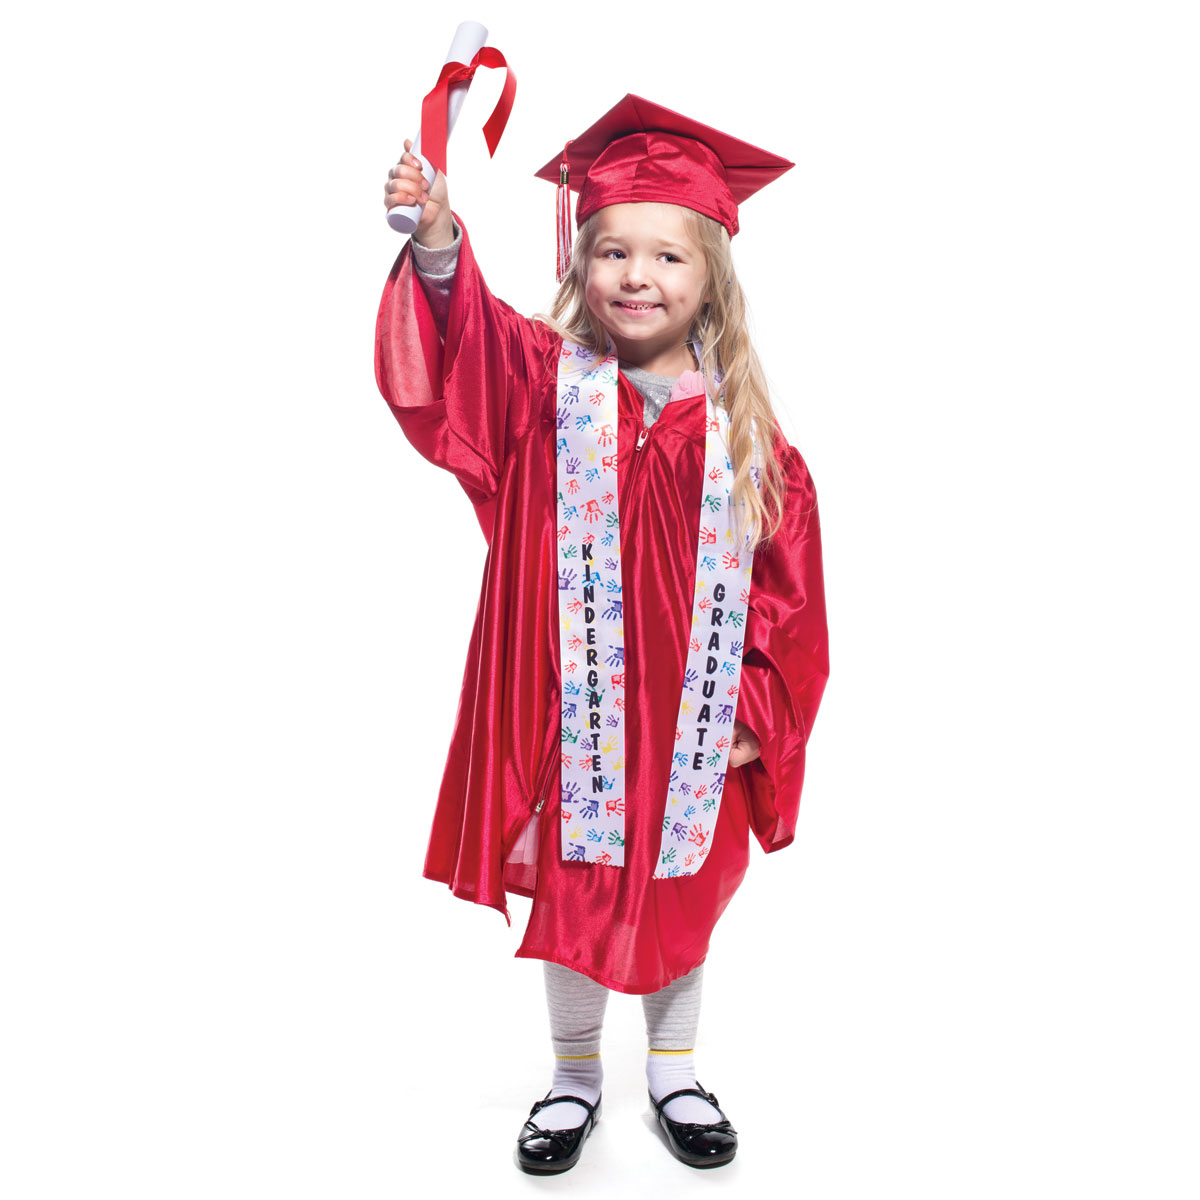 Child Preschool Imprinted Red Sash, Red | Graduation Source